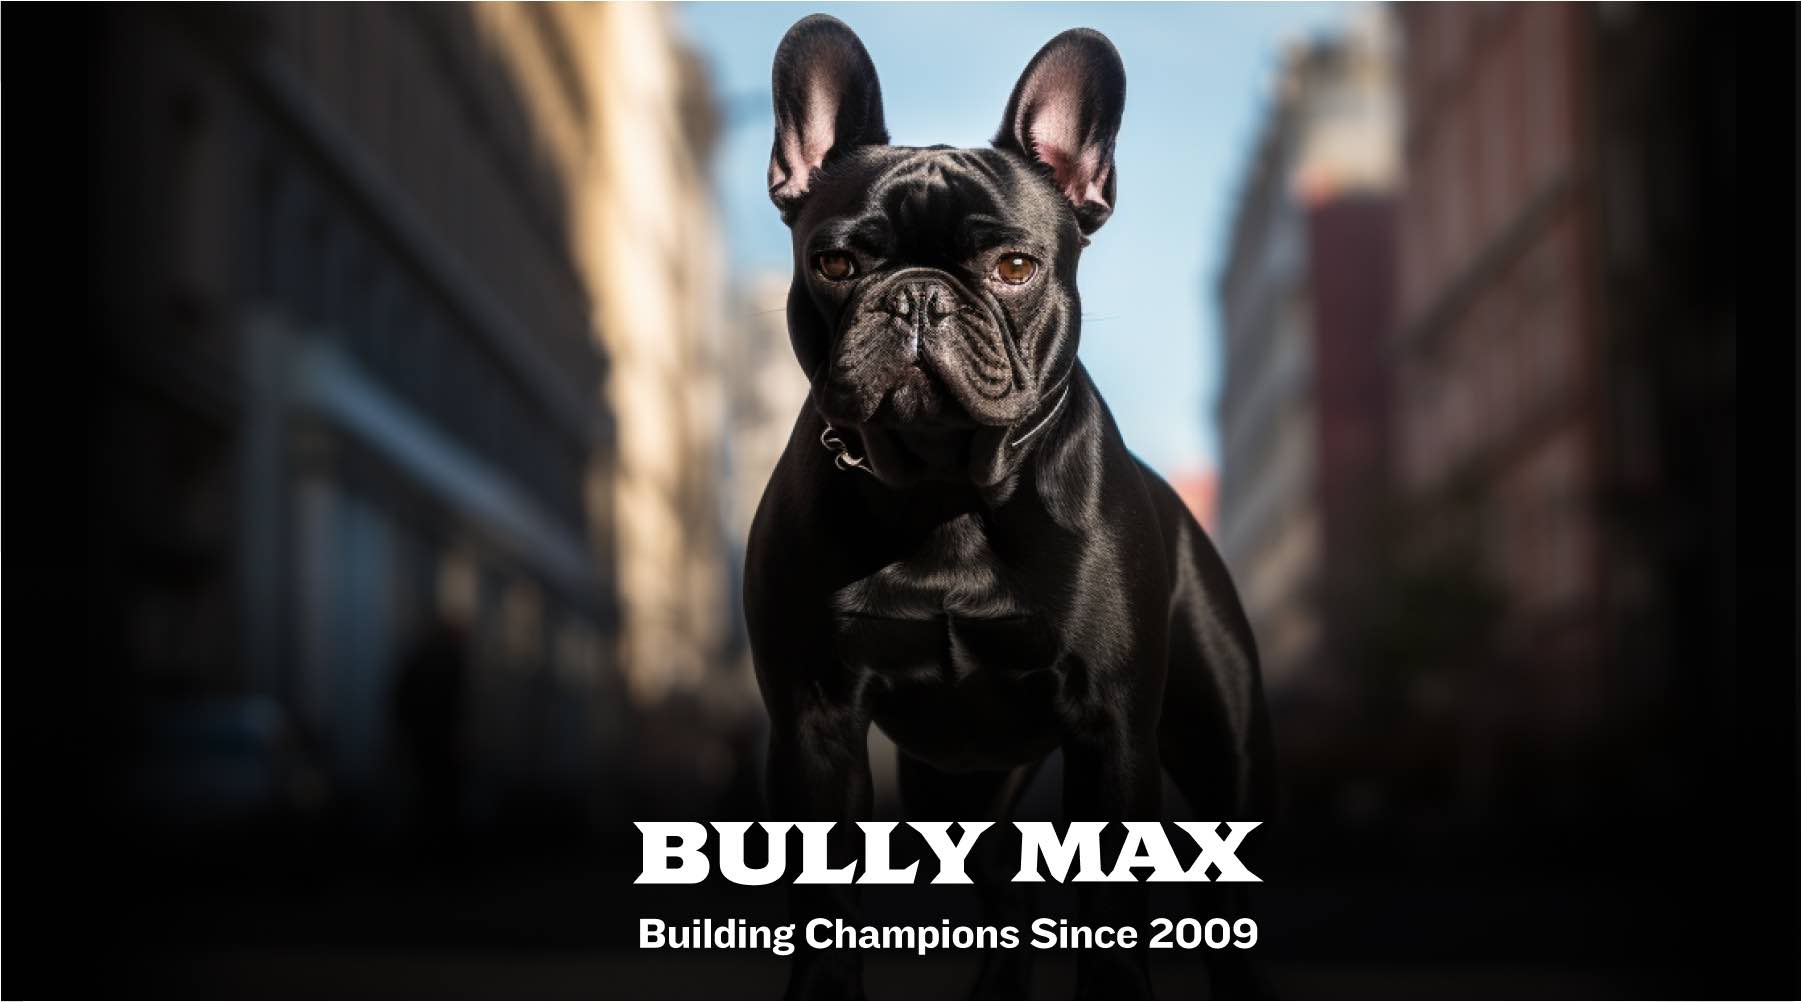 Best French Bulldog Toys - The Best Frenchie Gear  Bulldog puppies, Toy  bulldog, French bulldog puppies